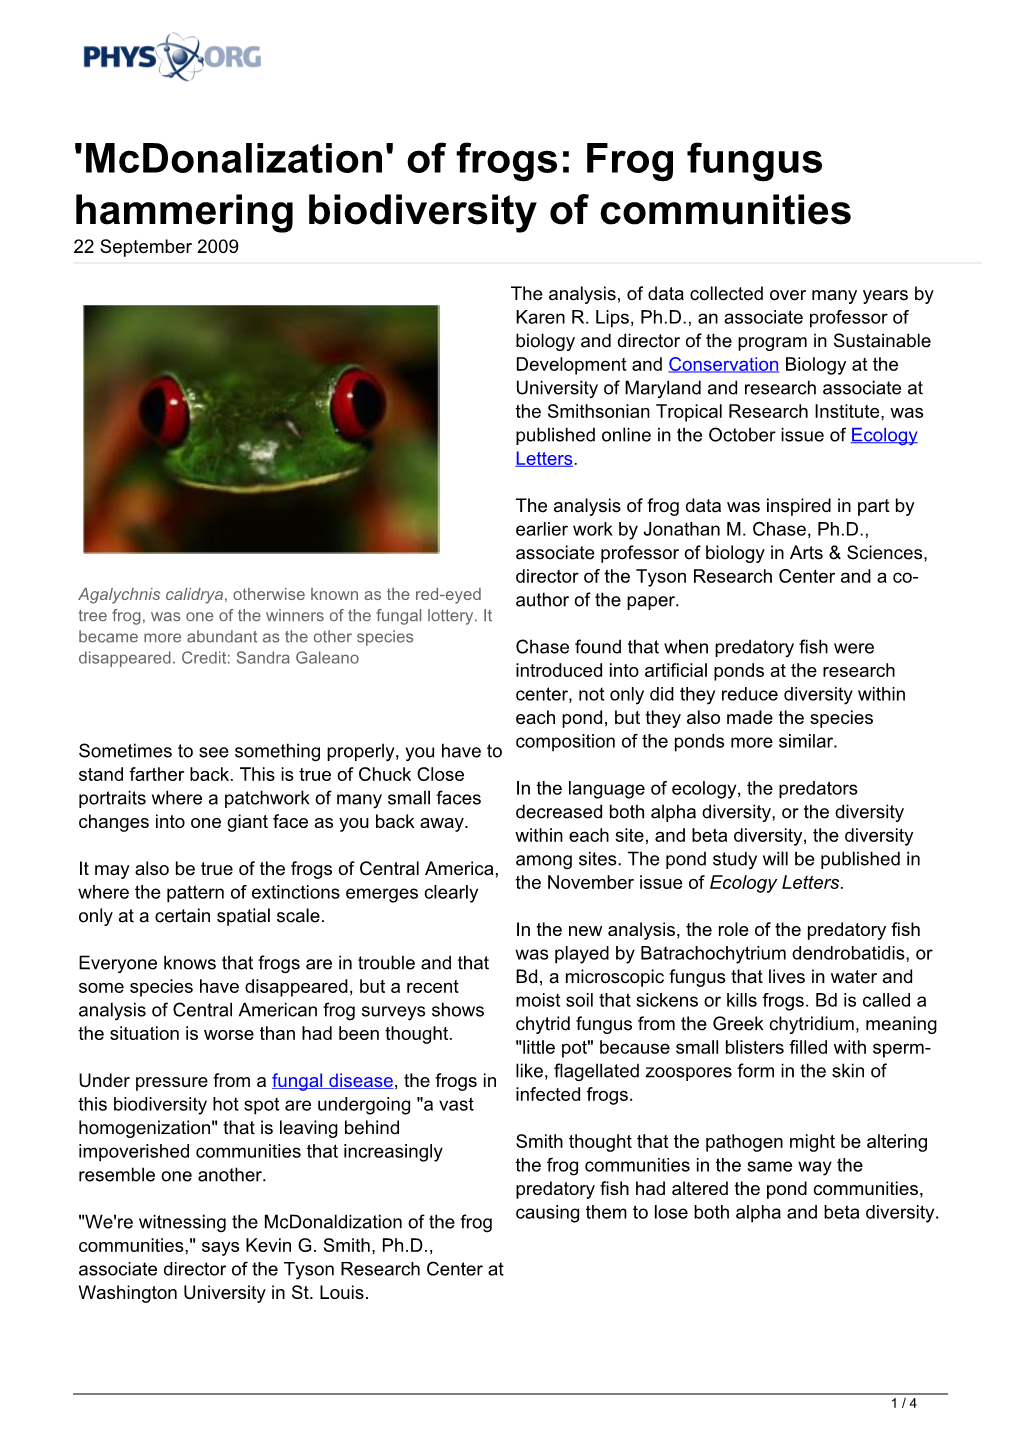 Of Frogs: Frog Fungus Hammering Biodiversity of Communities 22 September 2009